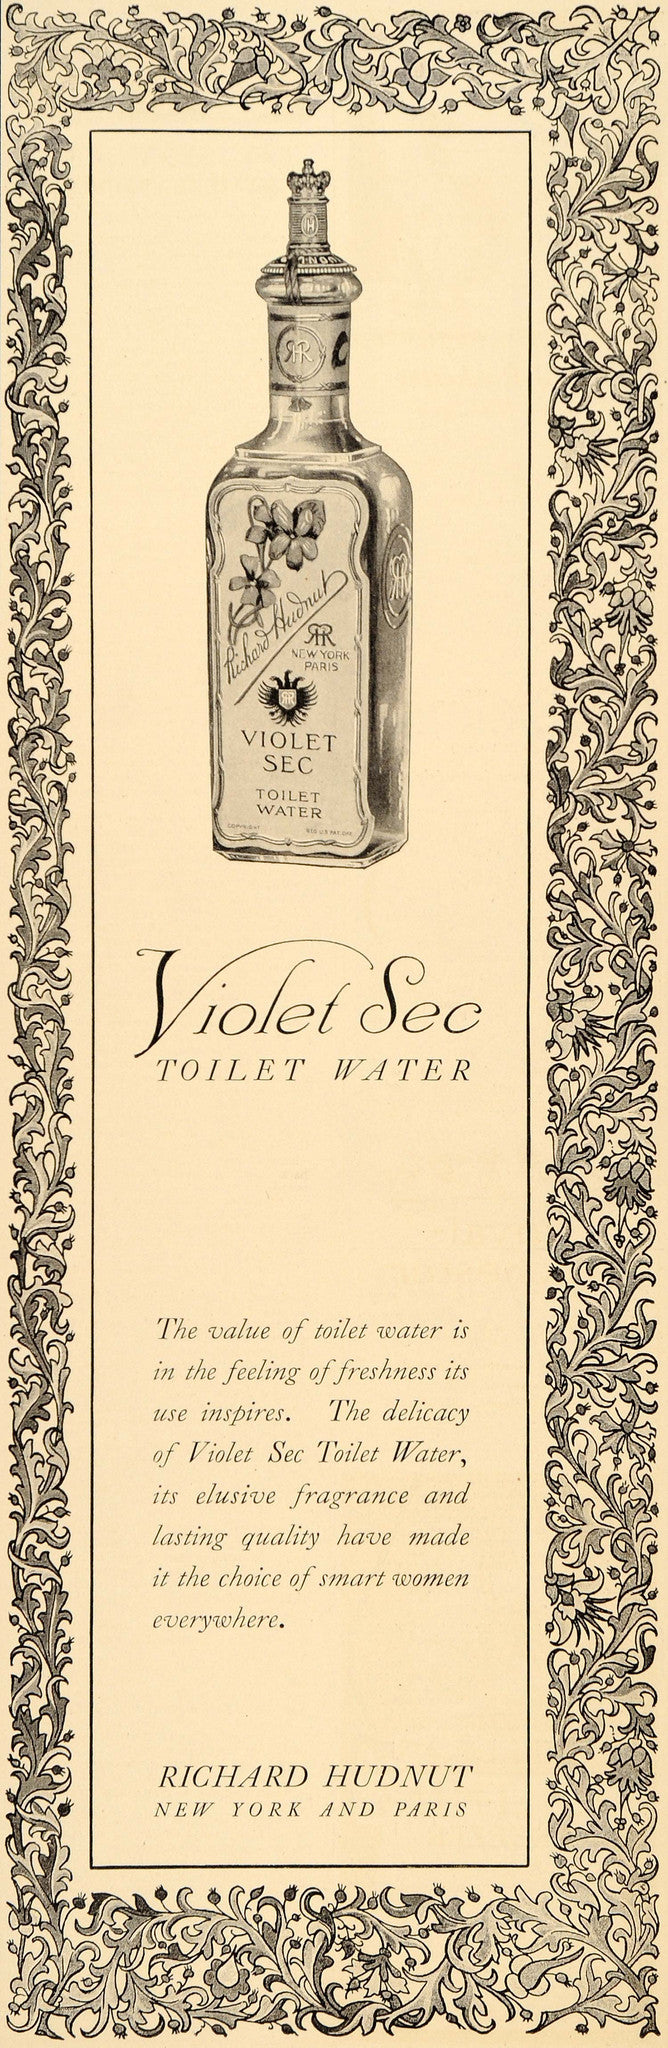 1914 Ad Violet Sec Toilet Water Women Perfume Hudnut - ORIGINAL ADVERTISING LHJ1 - Period Paper
